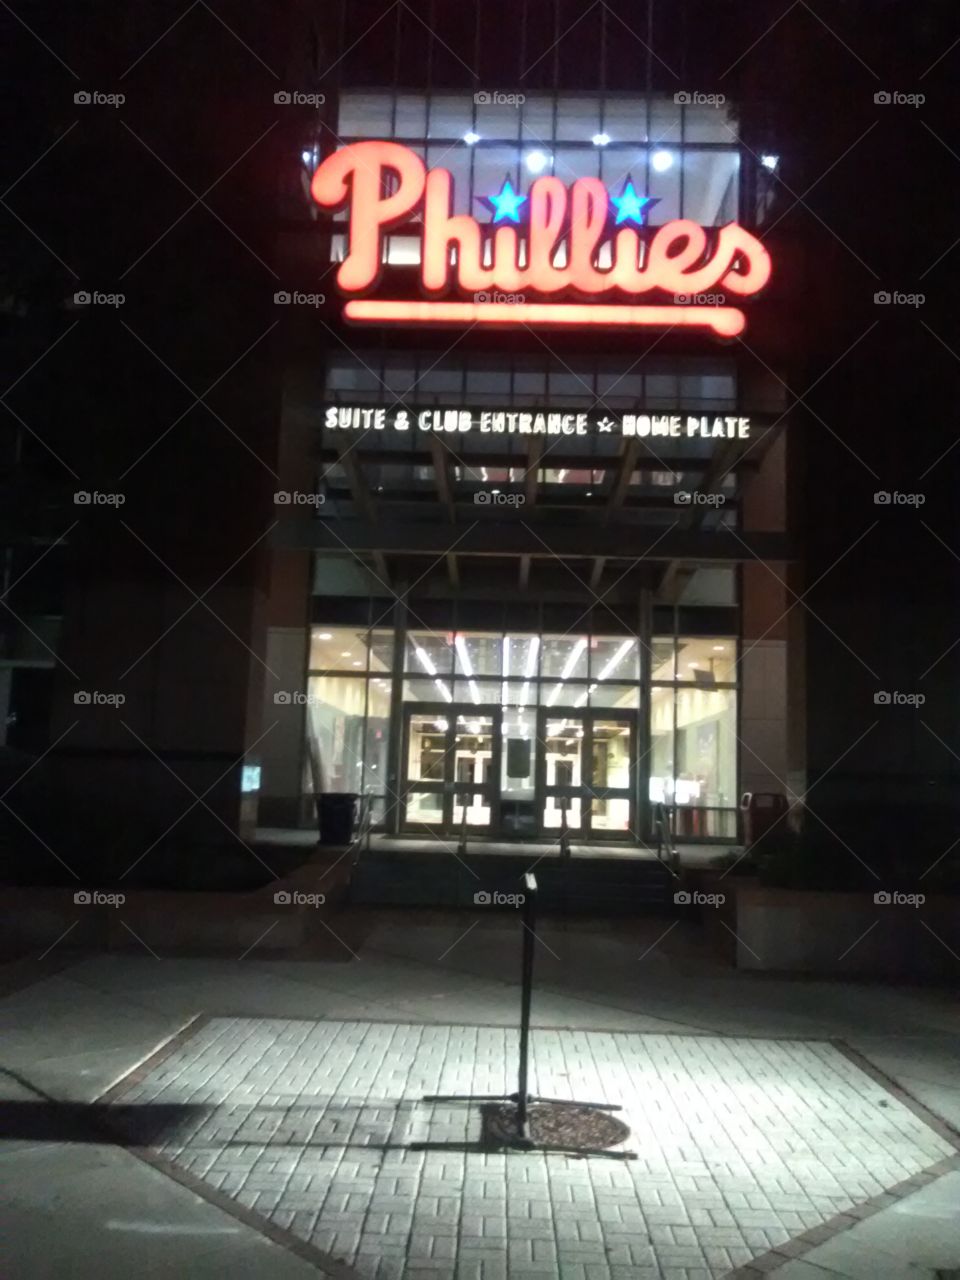 Phillie's Stadium Entrance